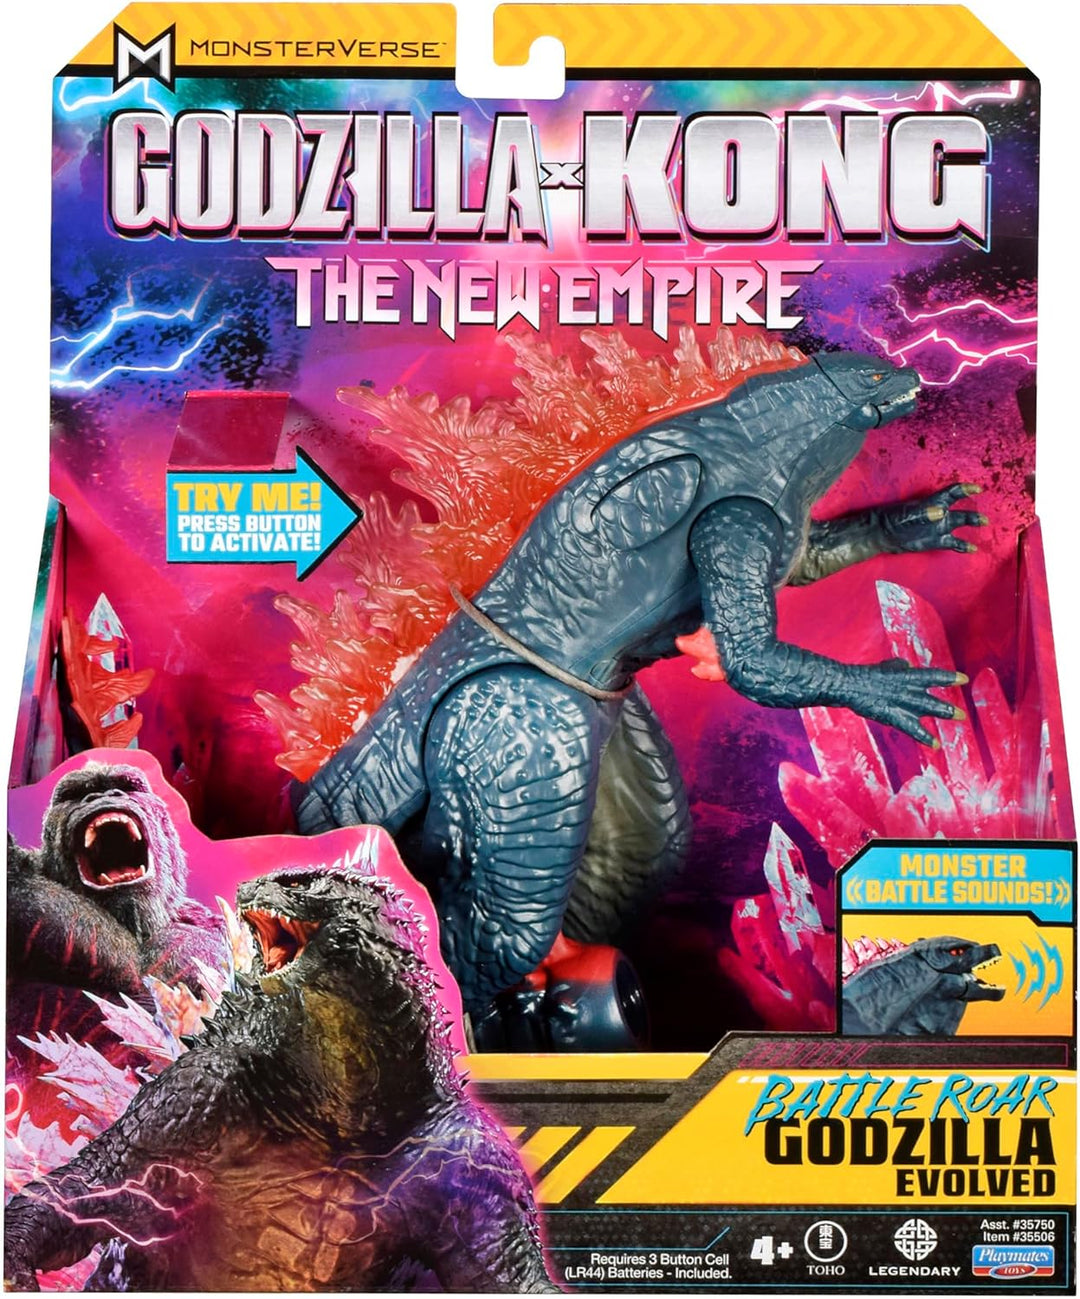 Godzilla x Kong The New Empire 11" Giant Godzilla Evolved Action Figure